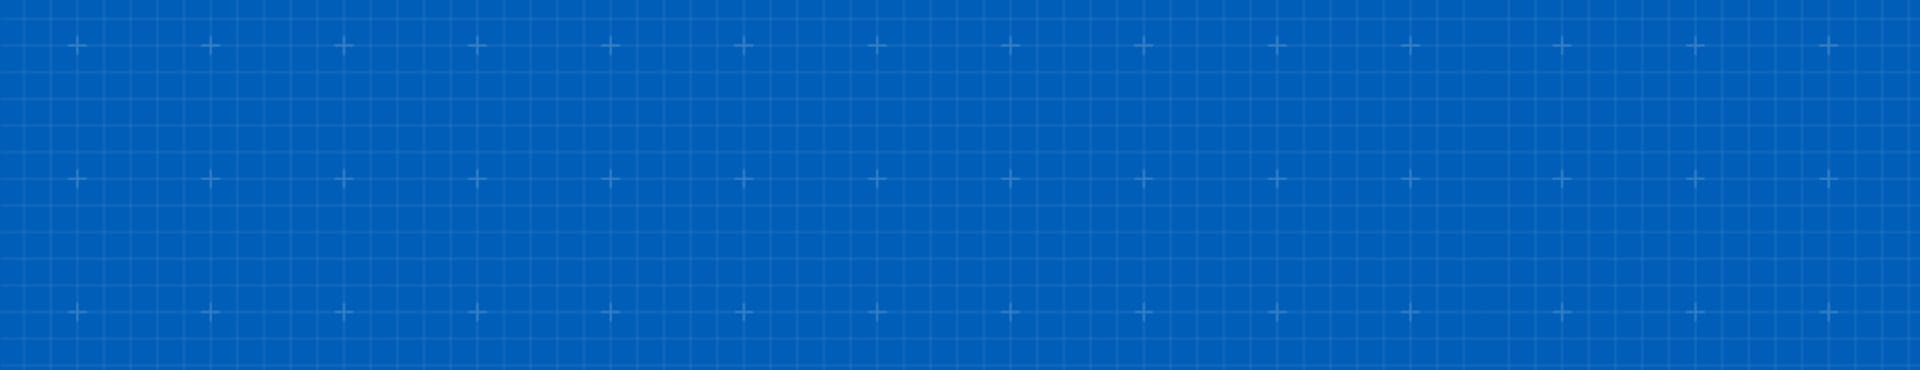 Background blue grid pattern